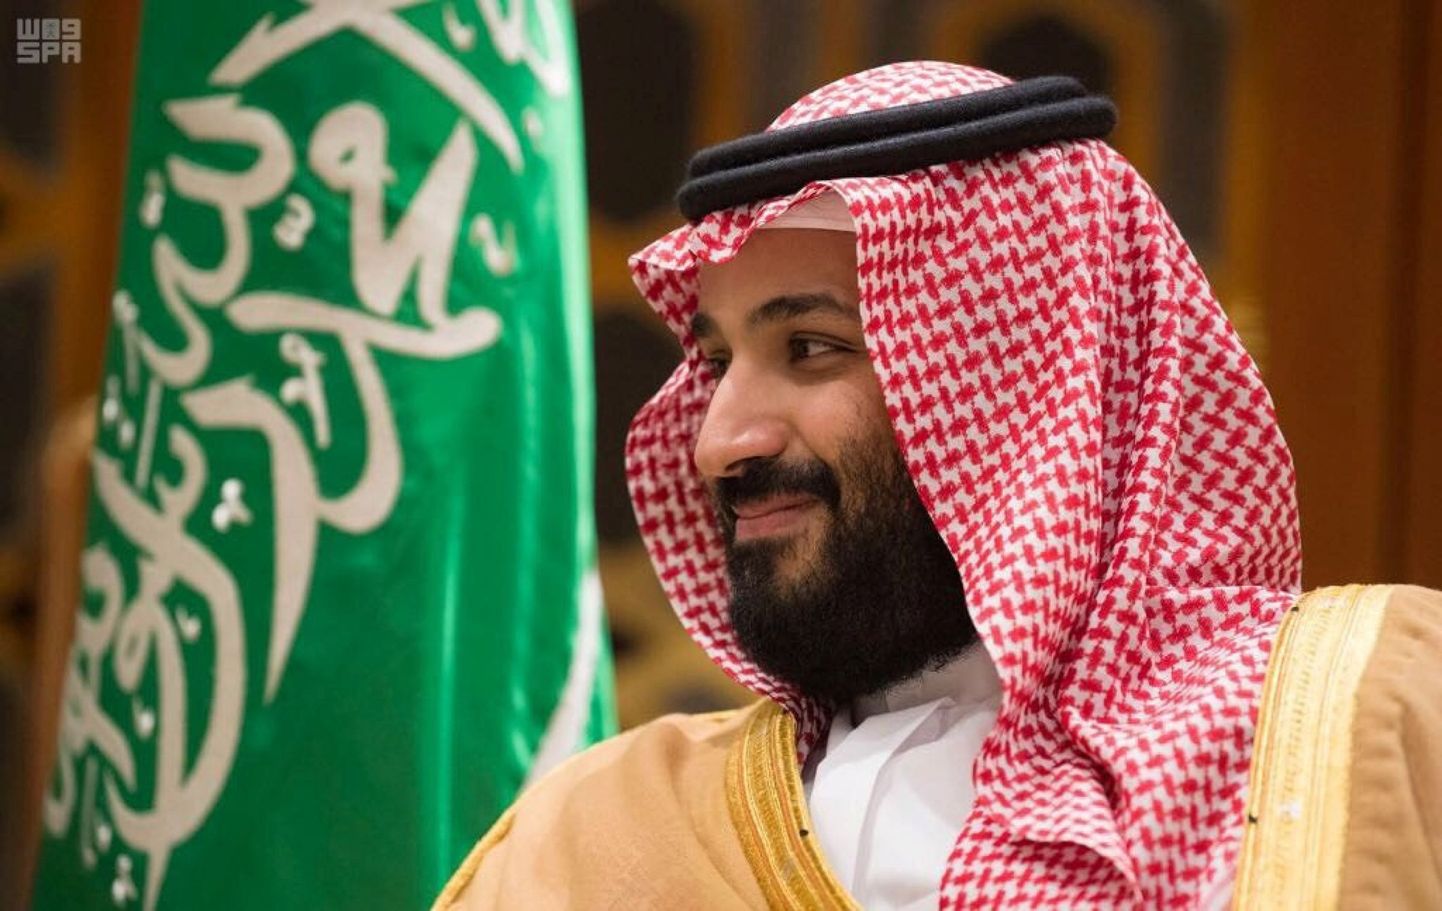 Saudi kroonprints Mohammed bin Salman